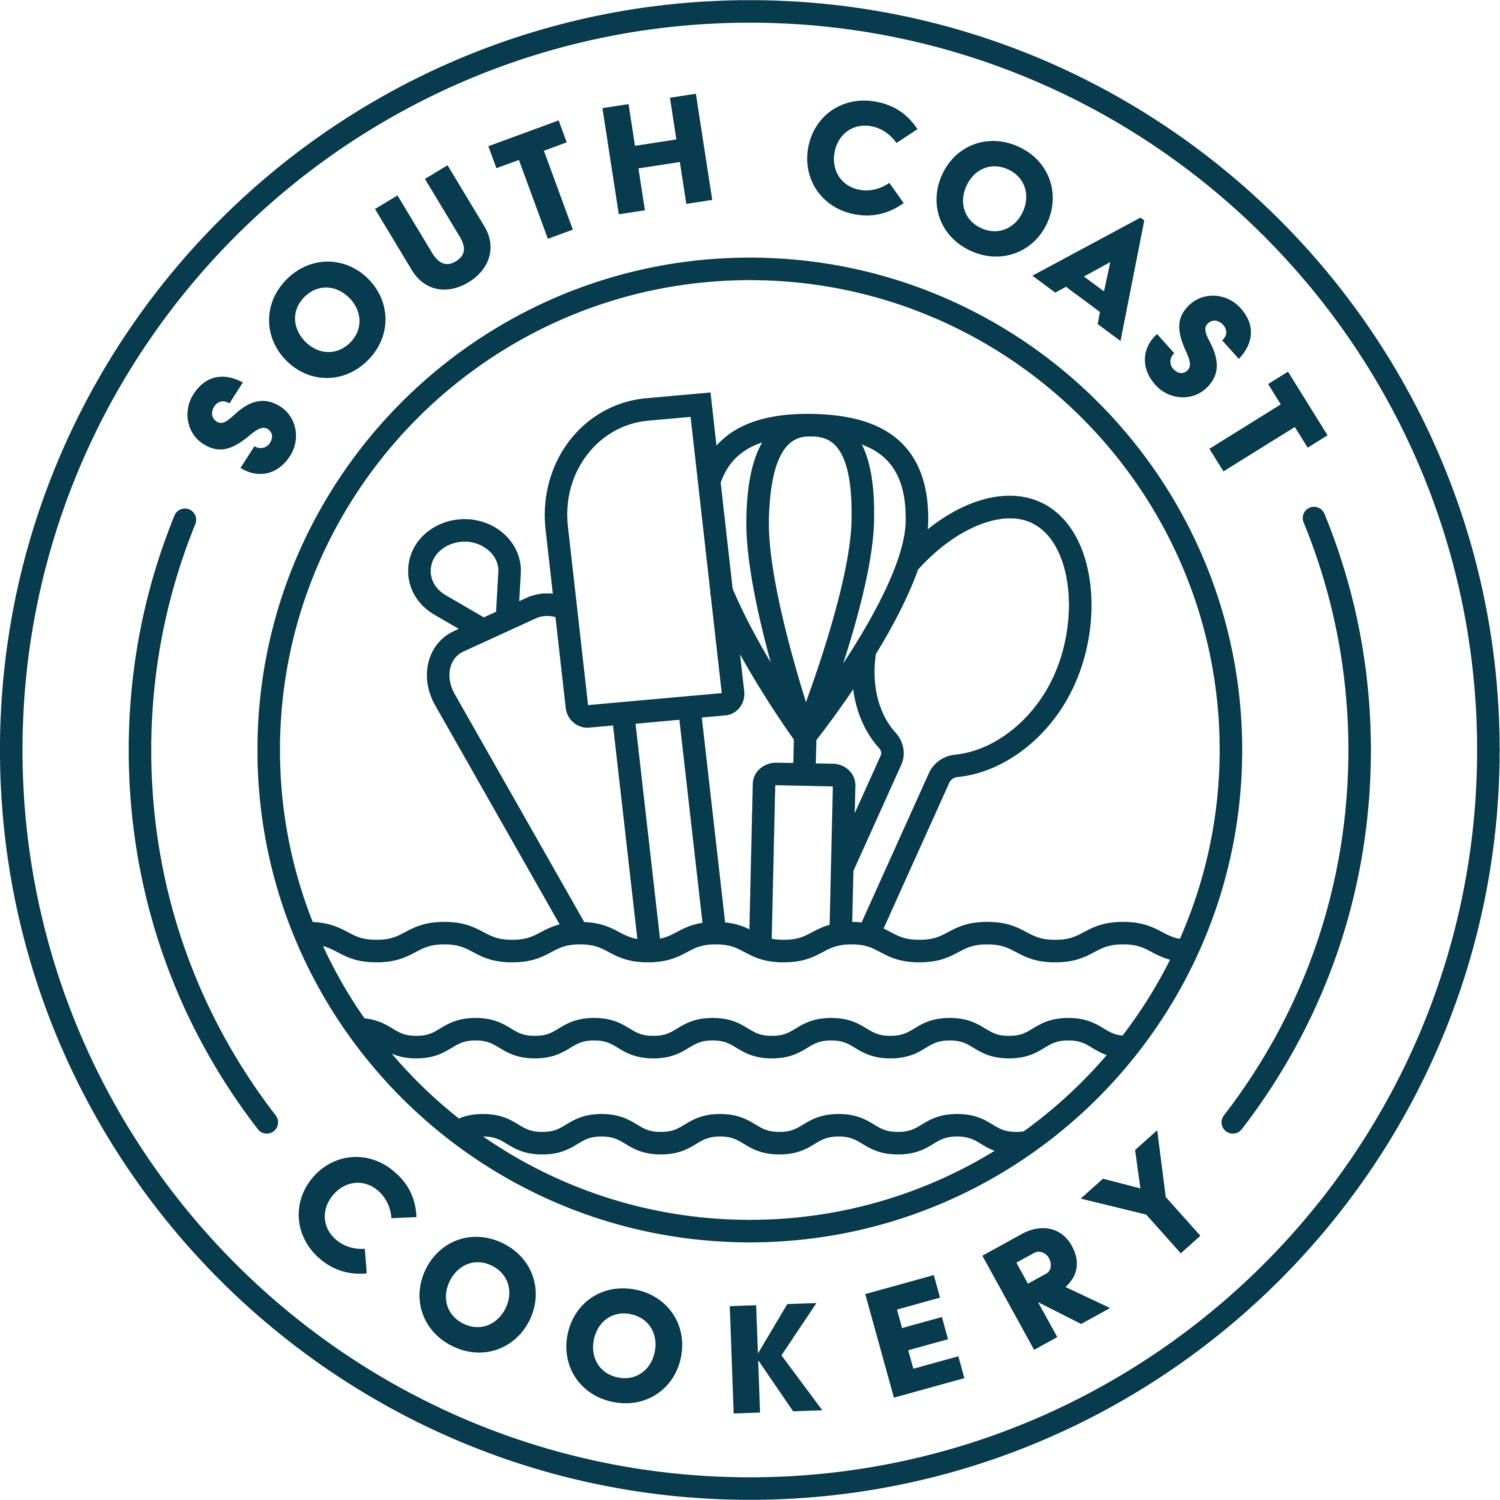 South Coast Cookery Logo